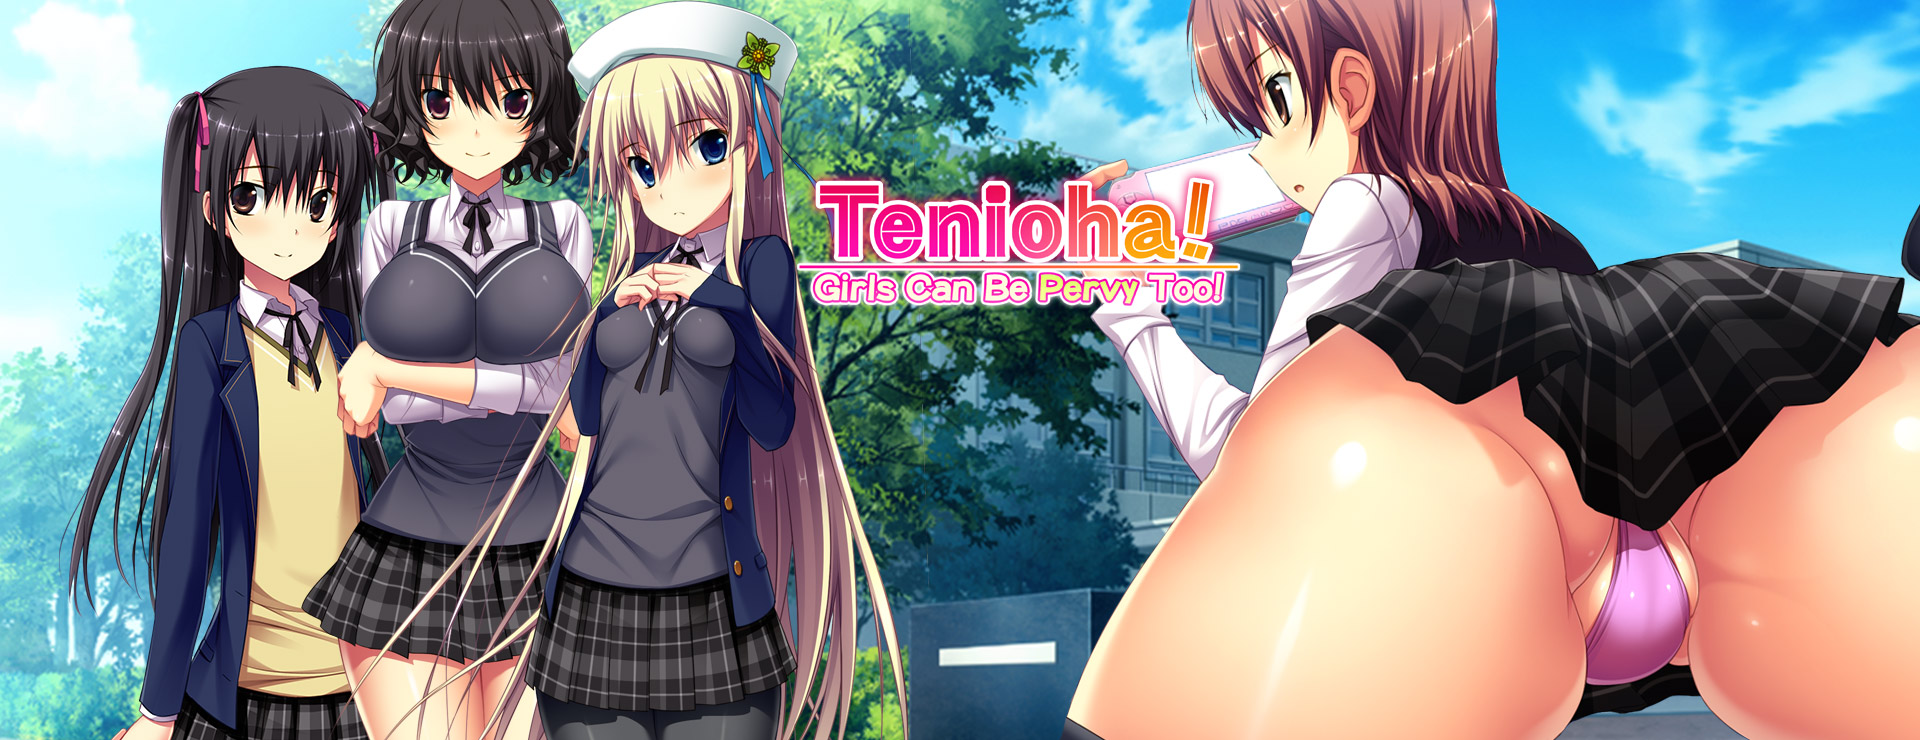 Tenioha! : Girls Can Be Pervy Too! - Novela Visual Juego